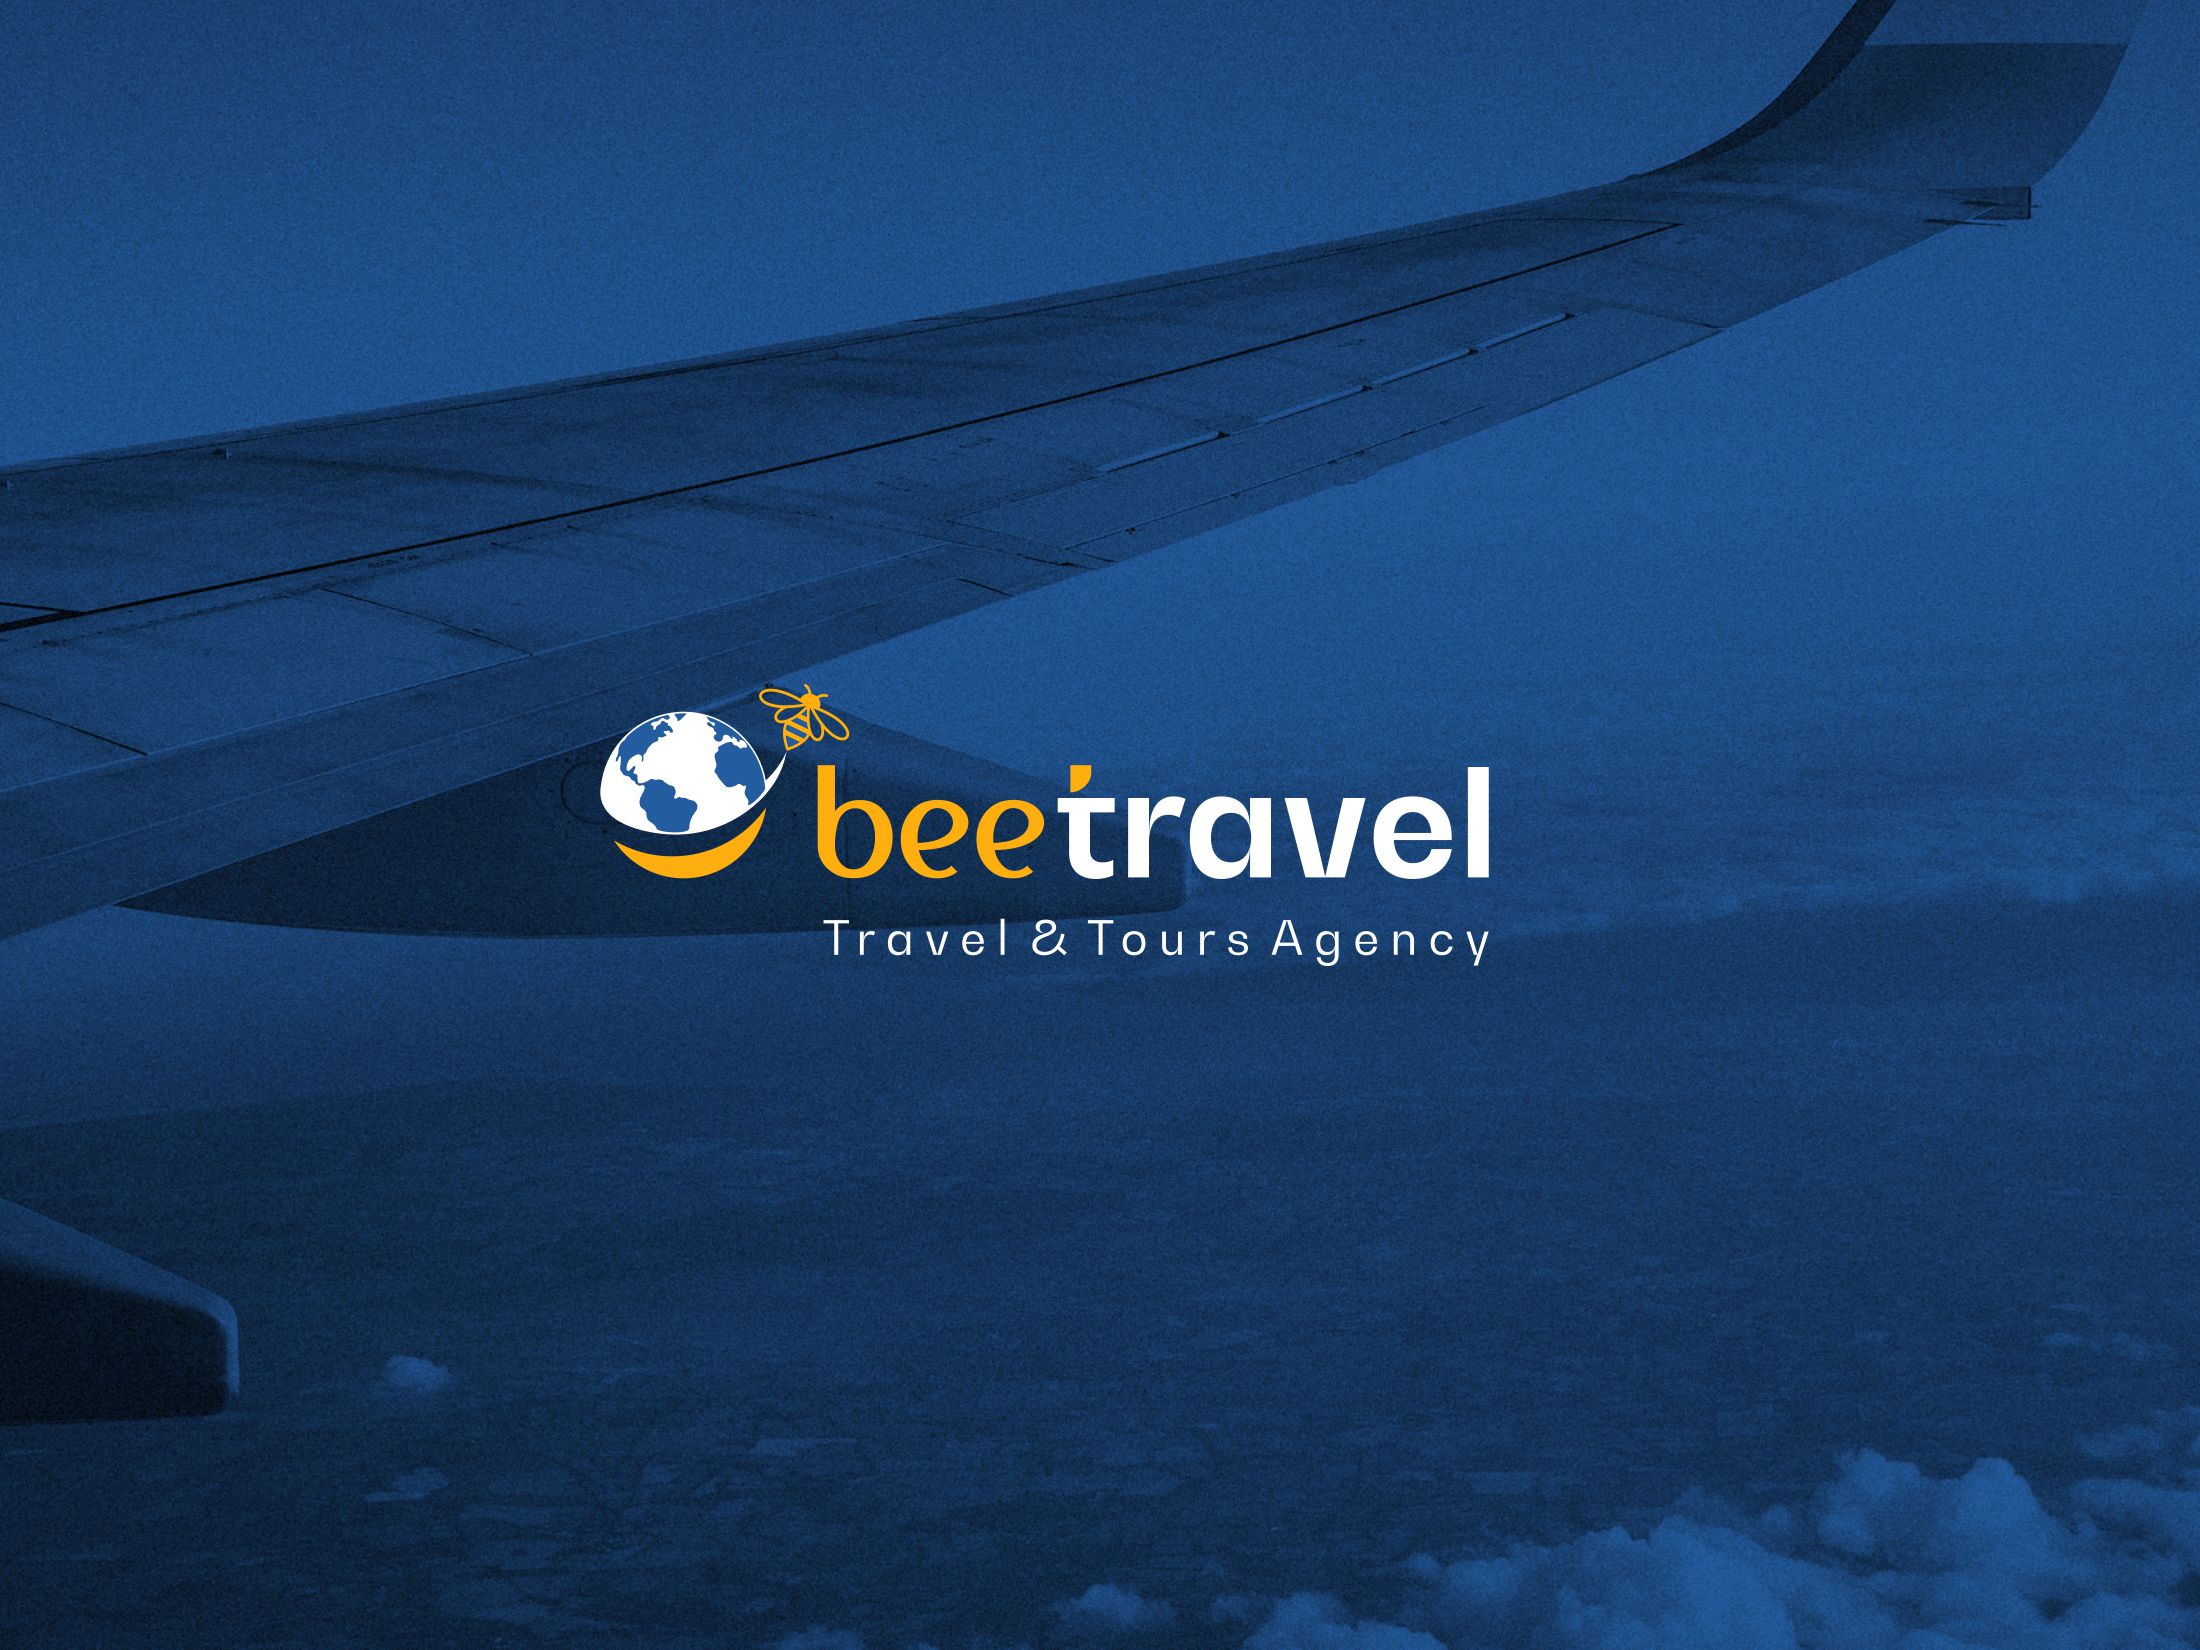 BeeTravel – travel & tours agency